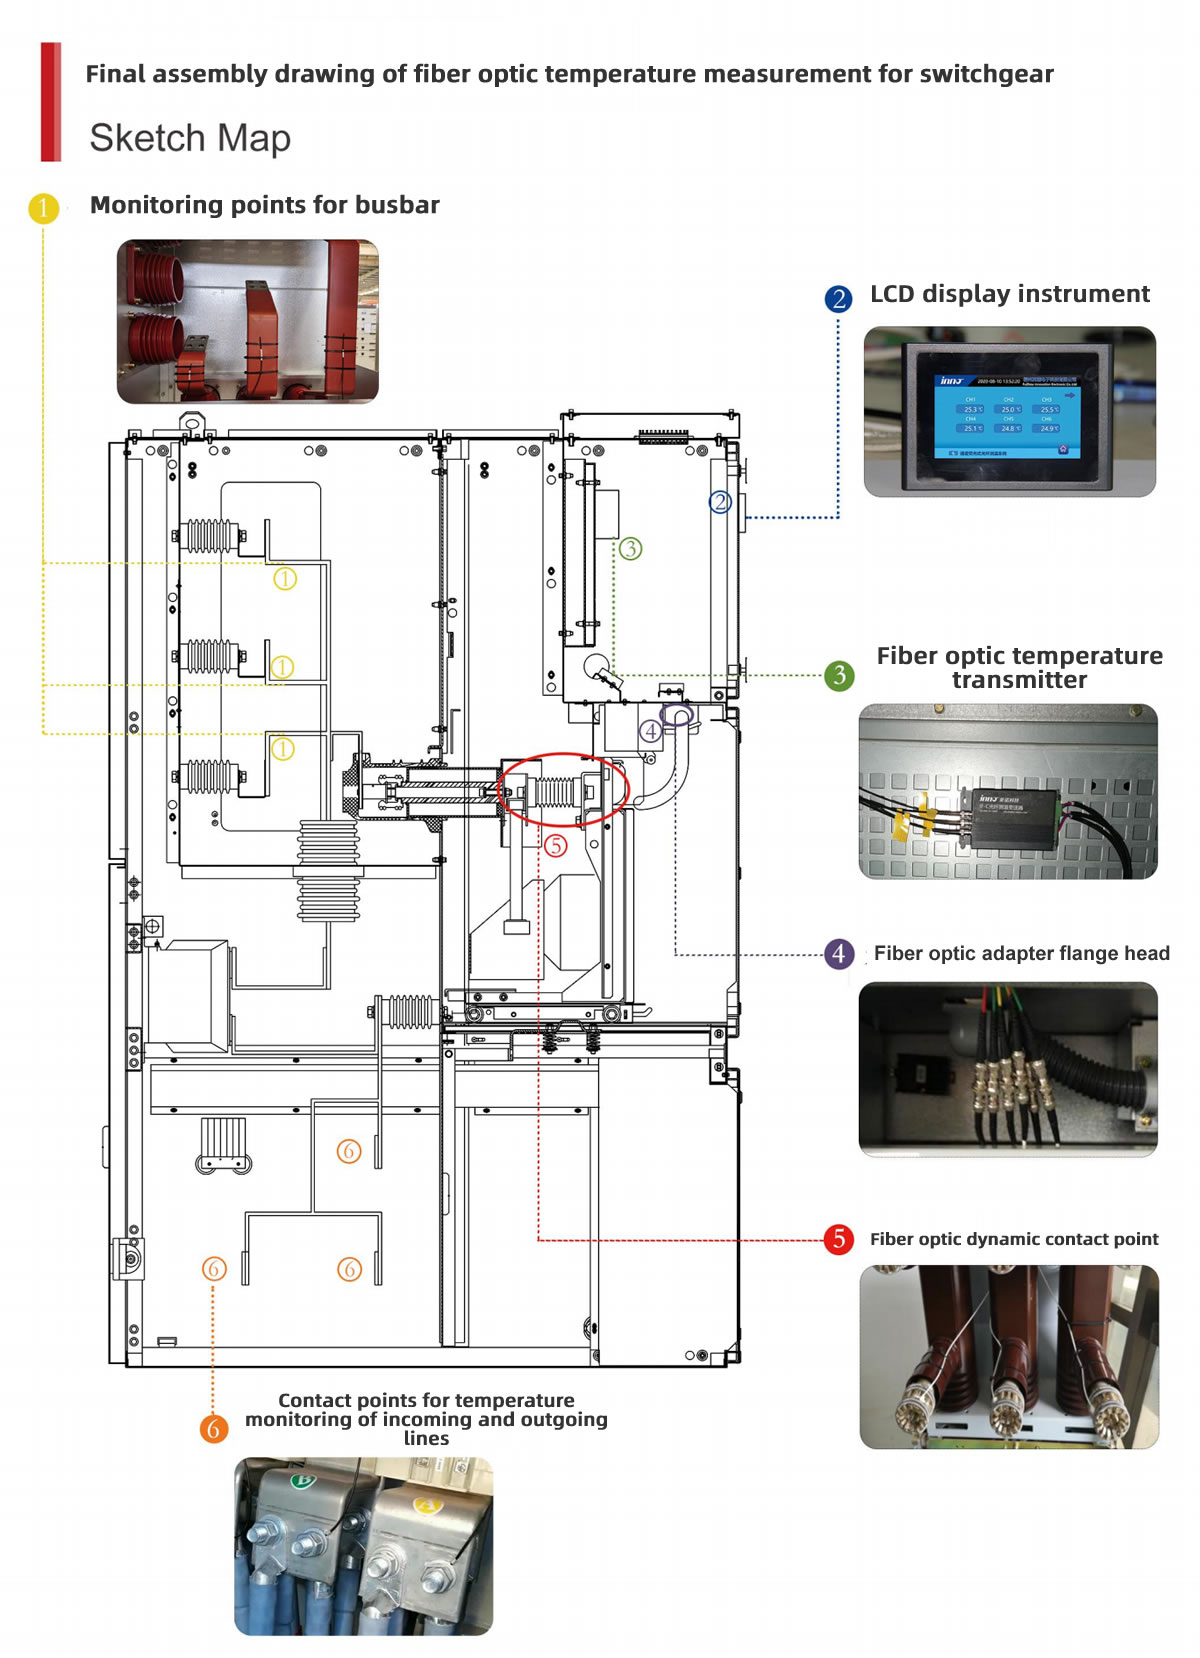 Fiber optic temperature measurement system for switchgear-1